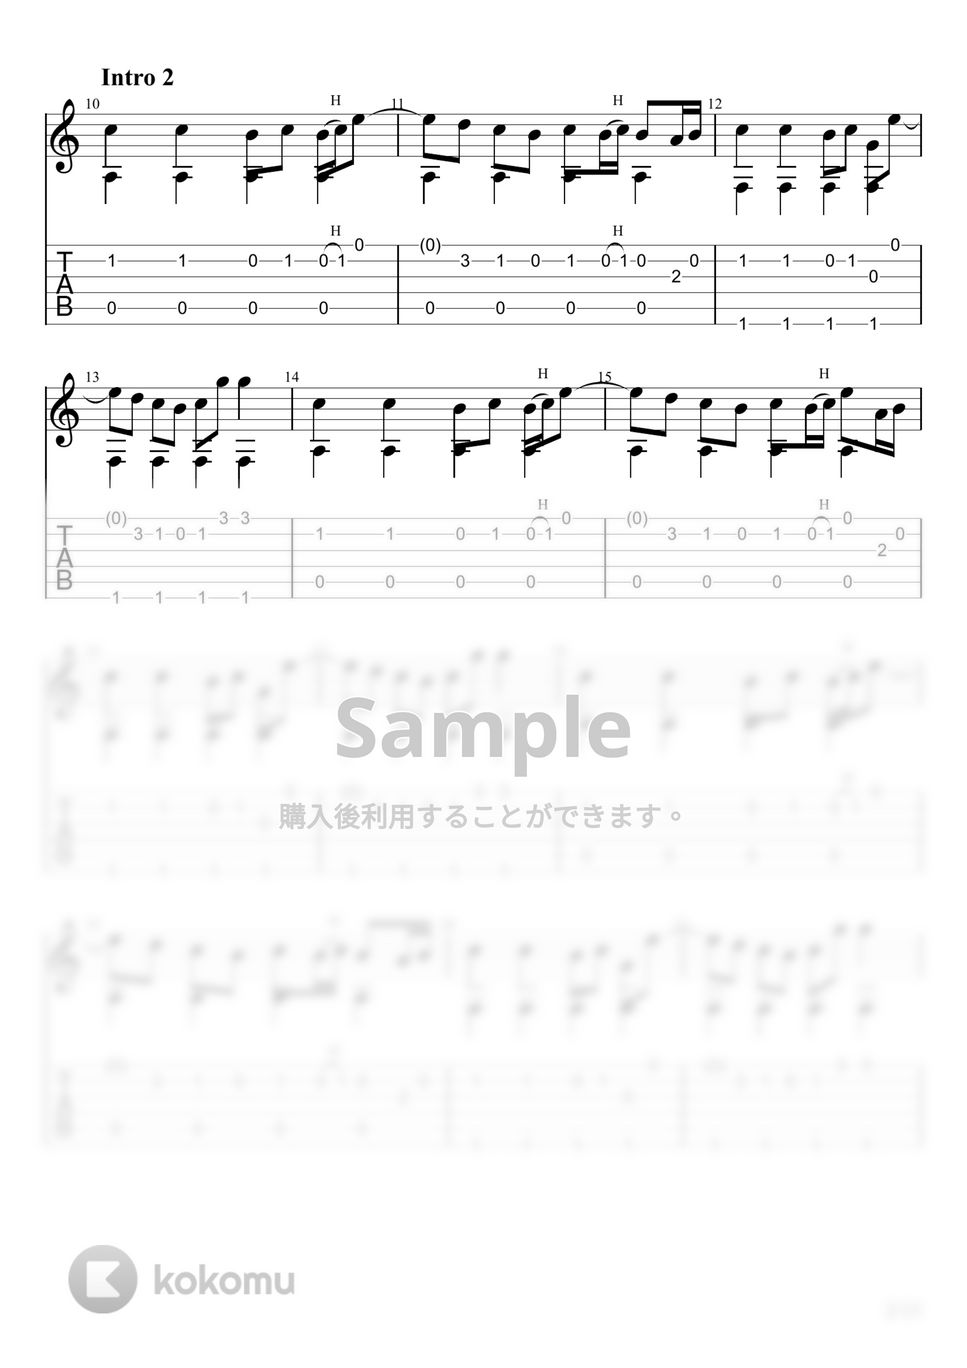 wowaka - ローリンガール (ソロギター) by u3danchou